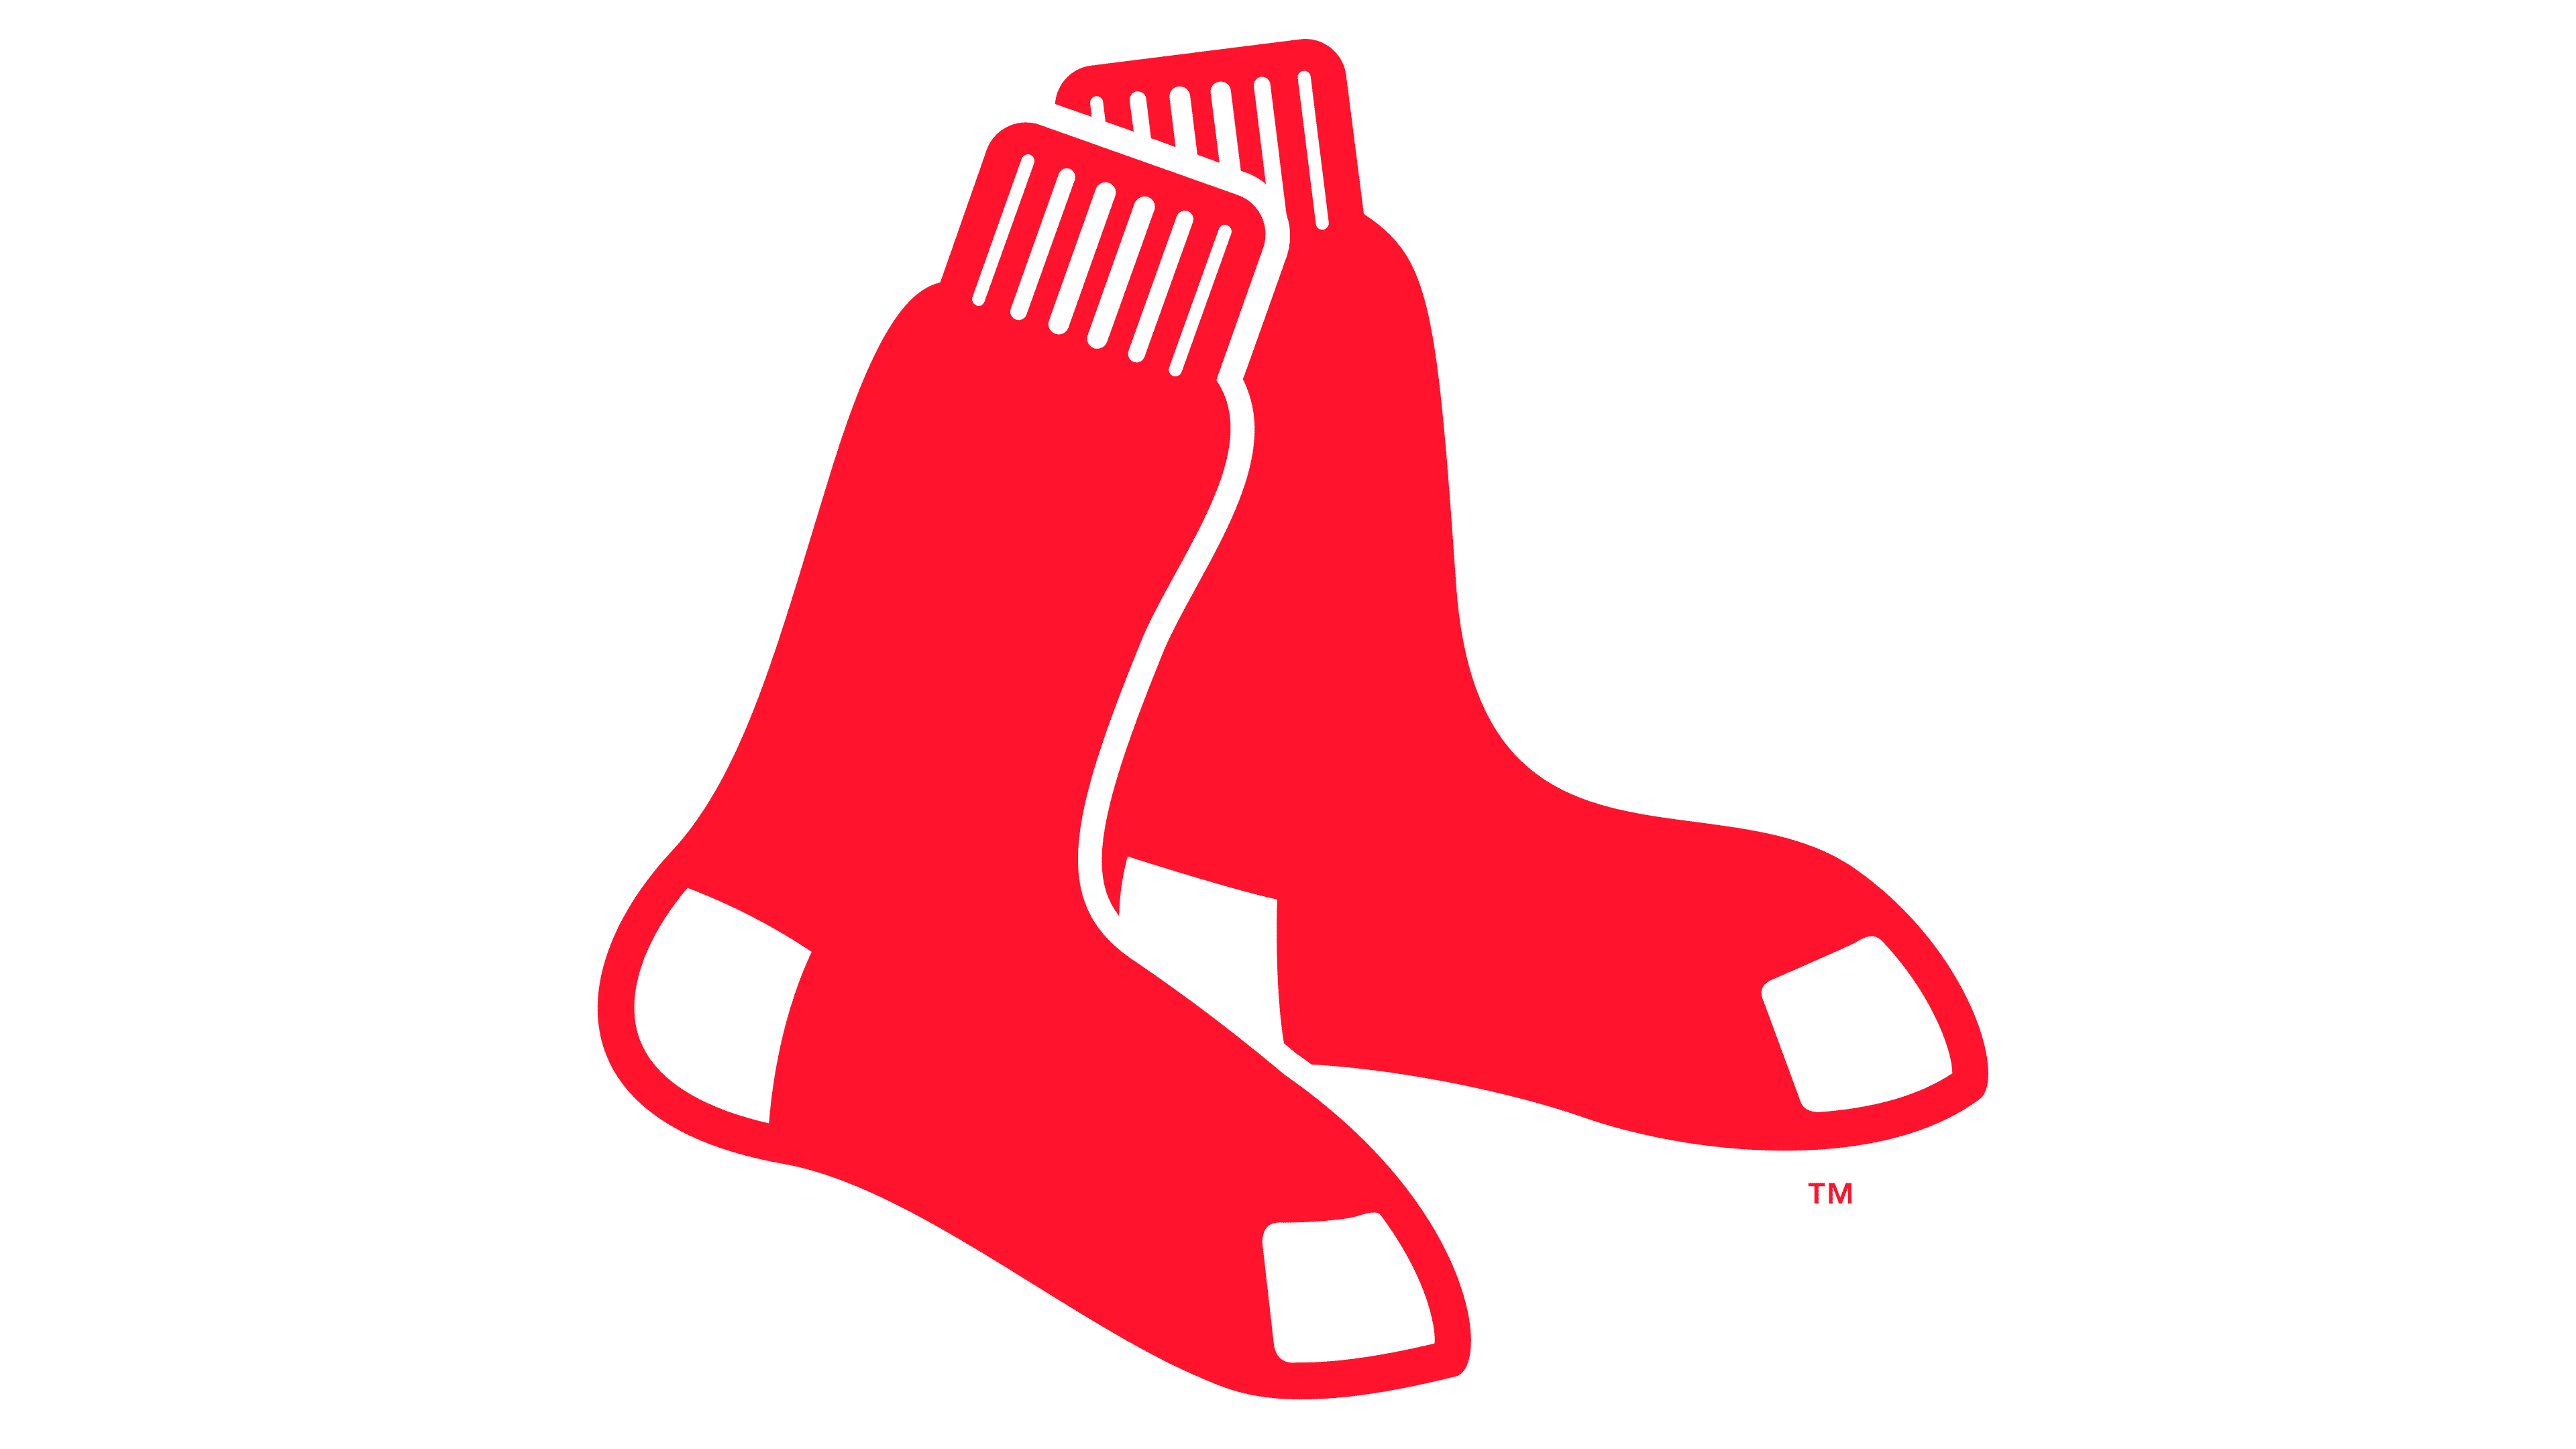 Red Sox Logo PNG Image